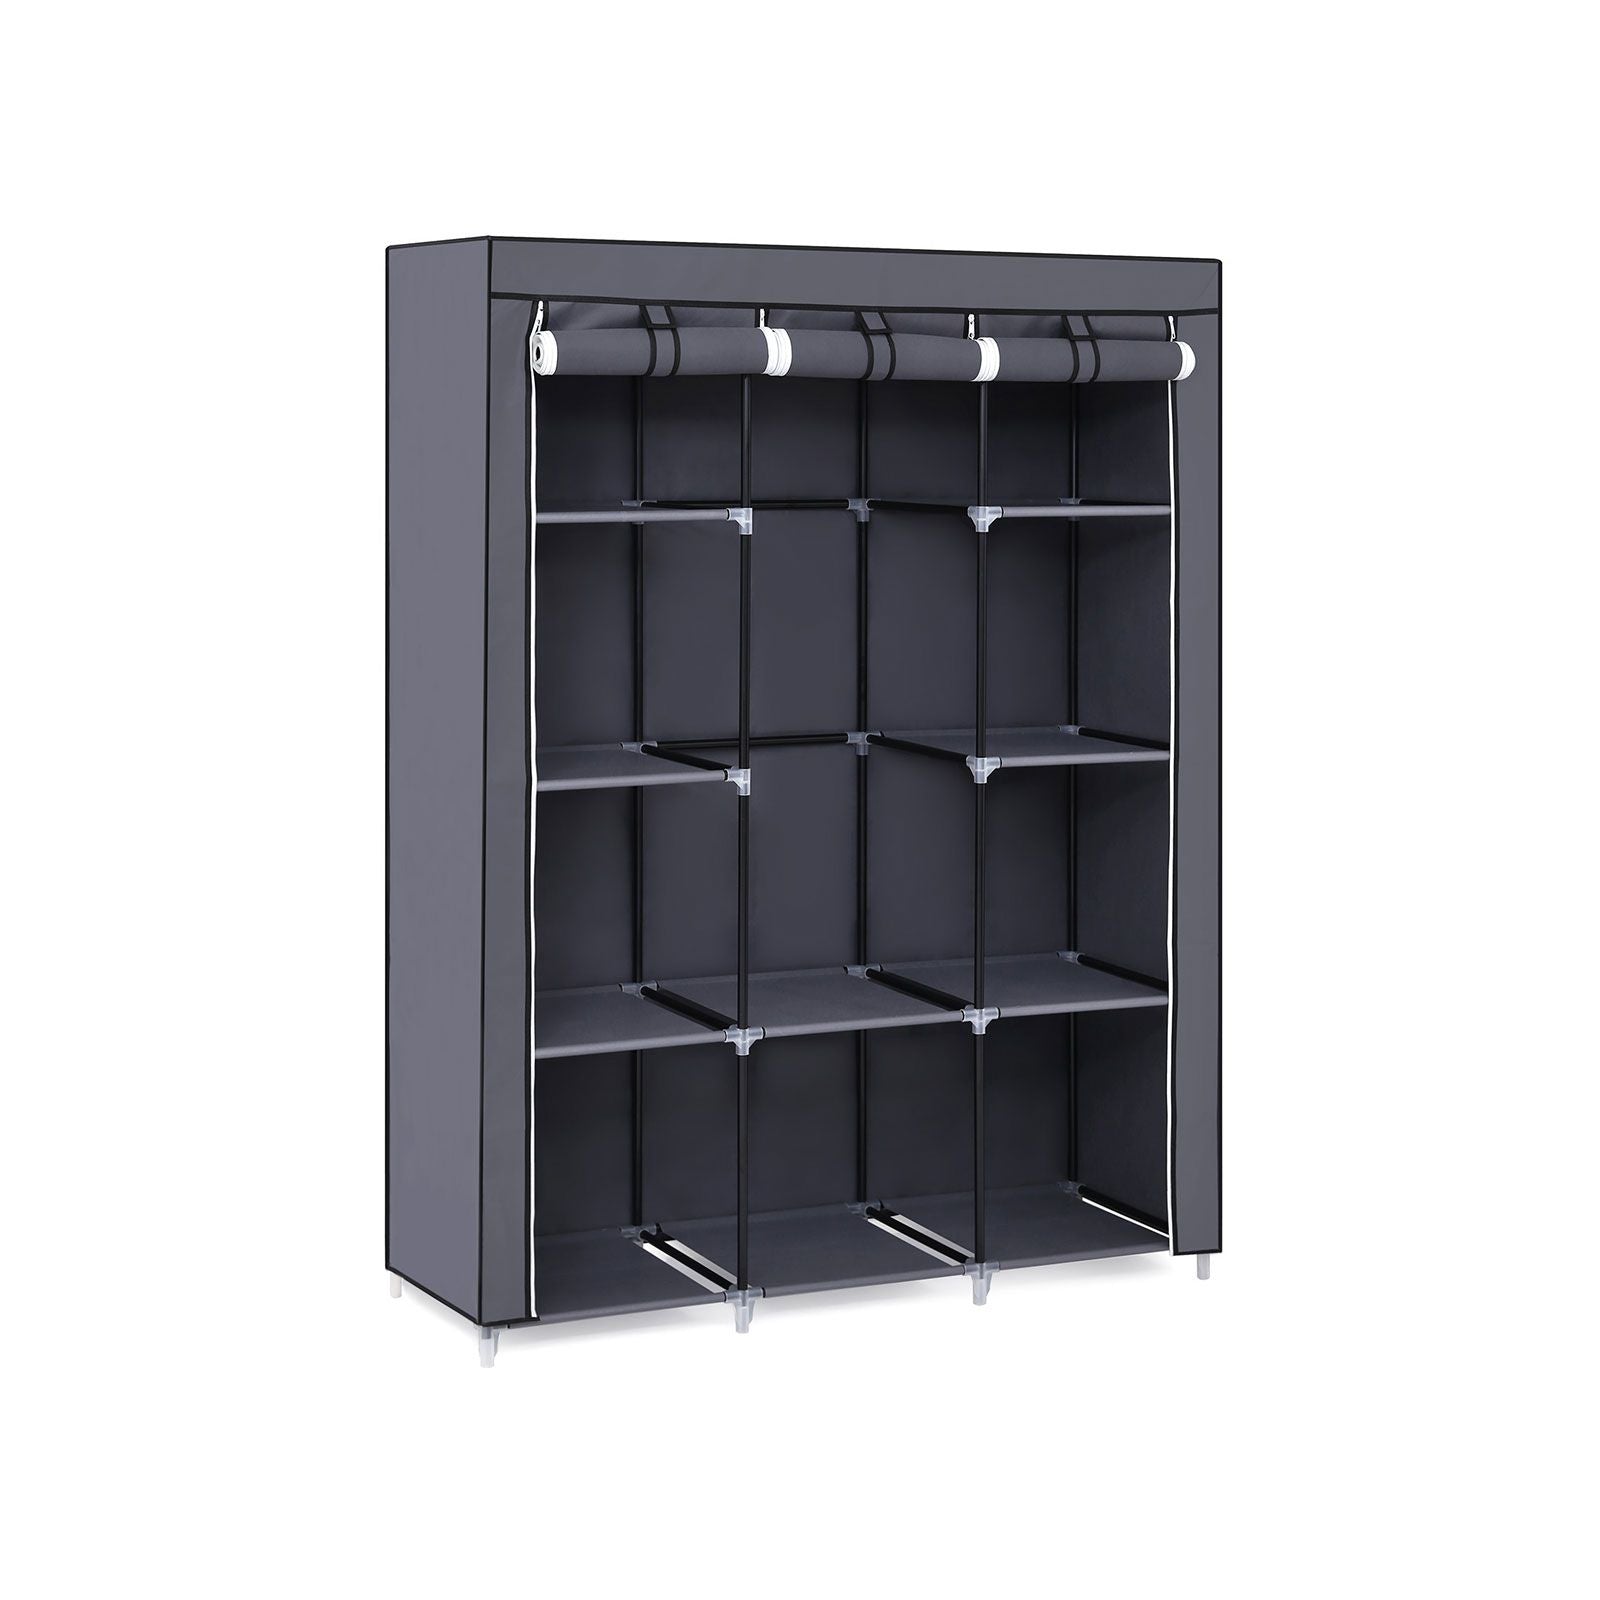 Ubesgoo Portable Closet Organizer Wardrobe Storage Clothes Organizer with 12 Shelves, Black